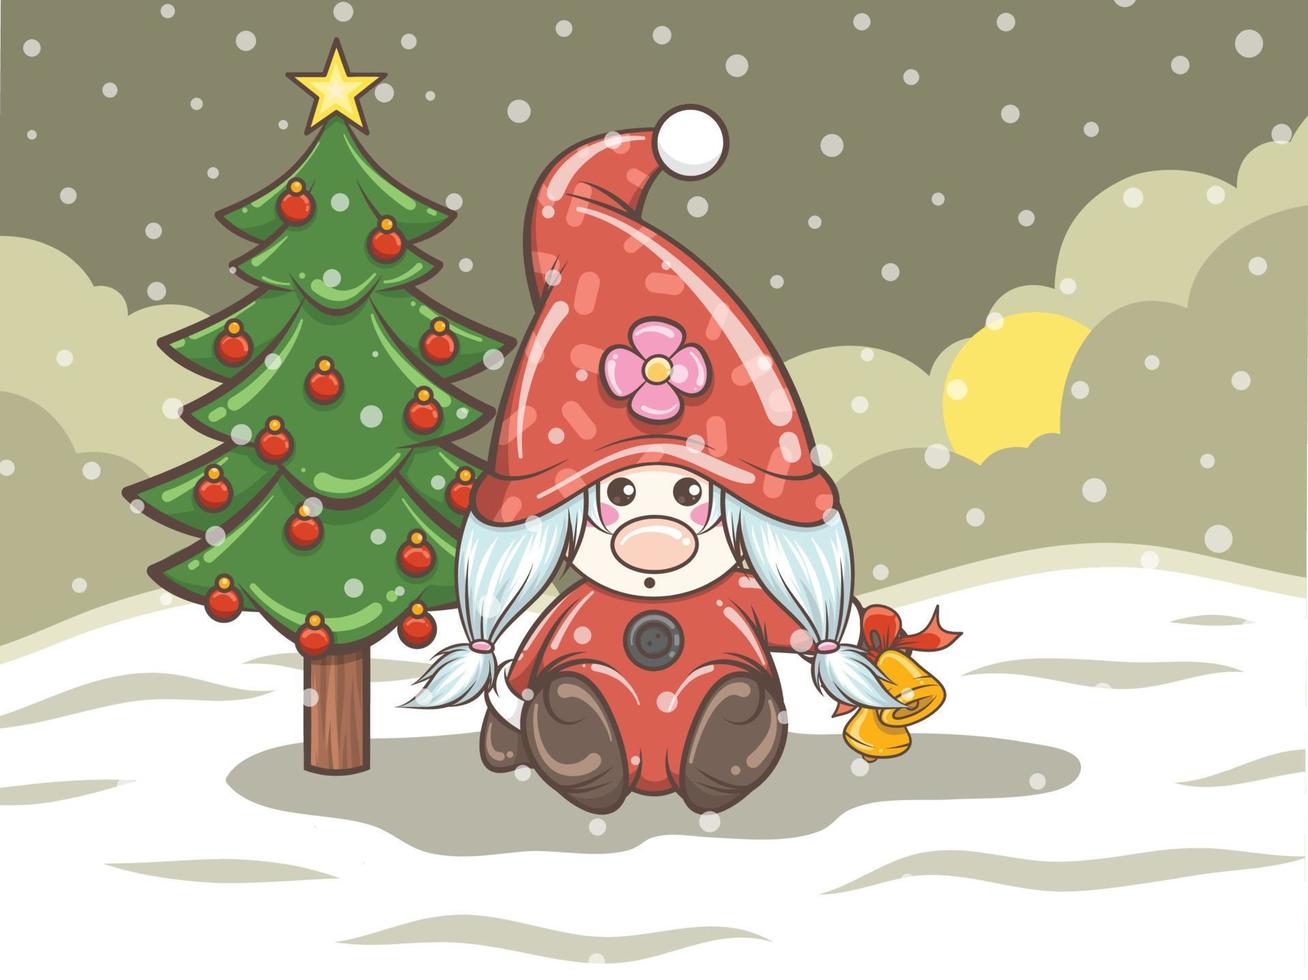 cute gnome girl illustration holding Christmas bell vector